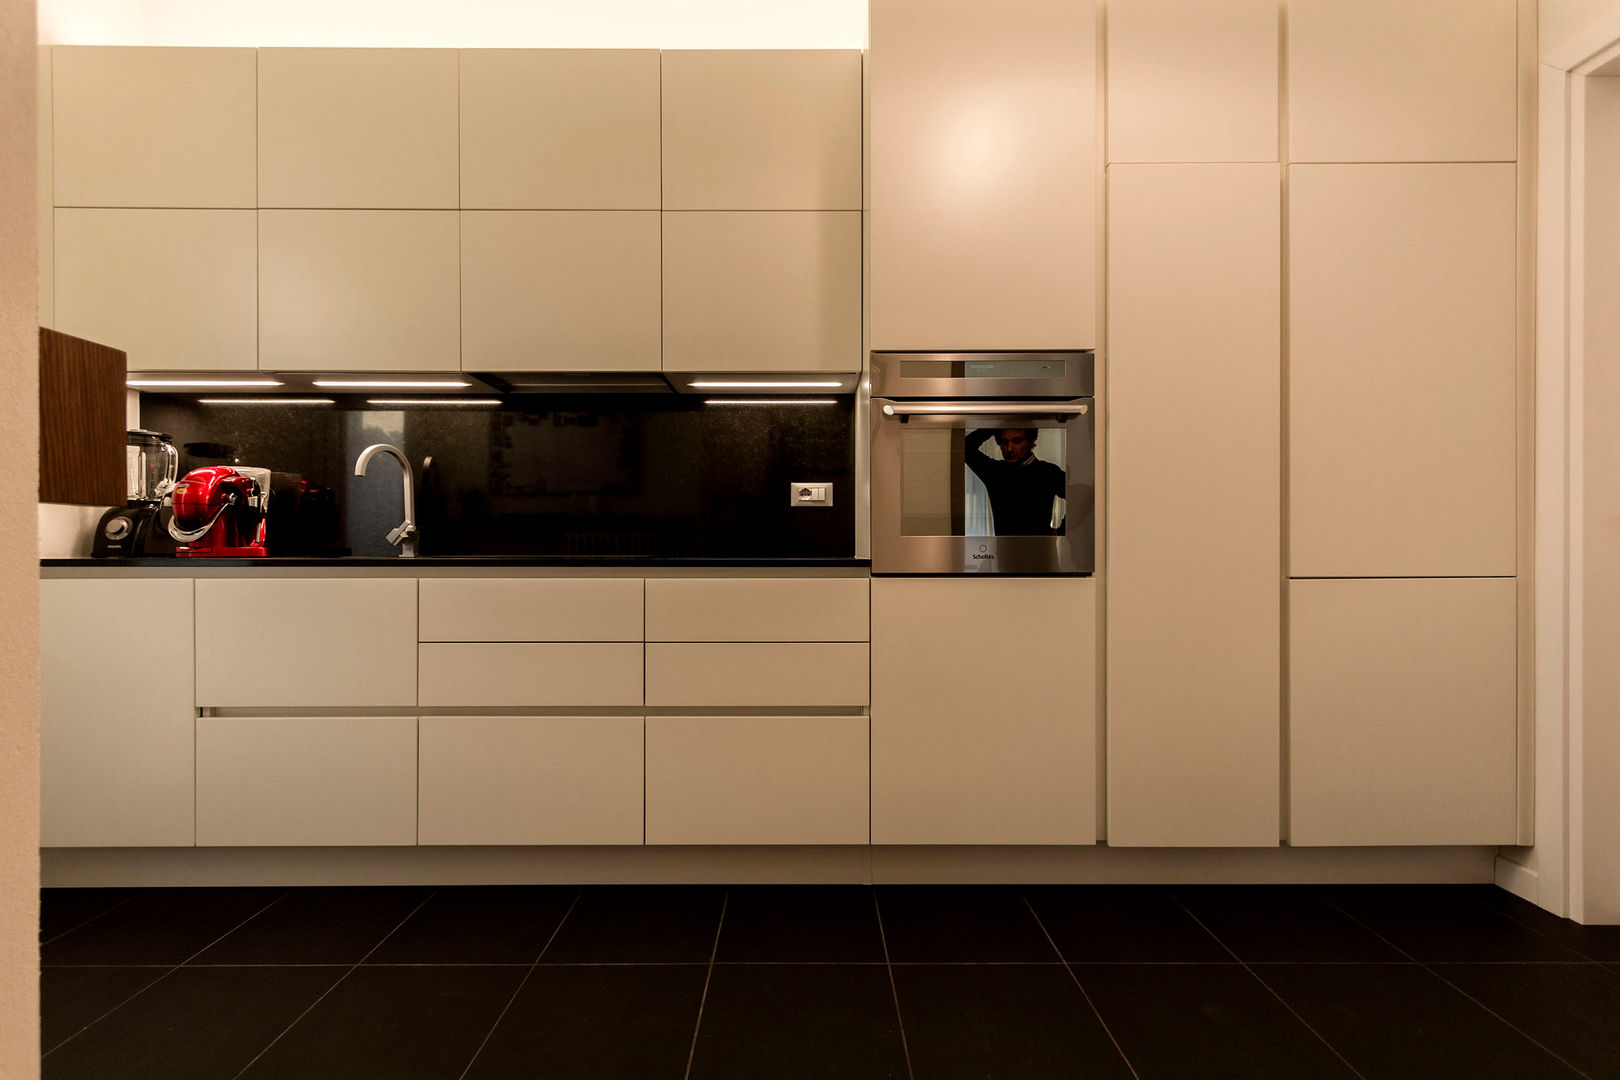 Appartamento Residenziale - Cernobbio 2015, Galleria del Vento Galleria del Vento Cocinas de estilo moderno